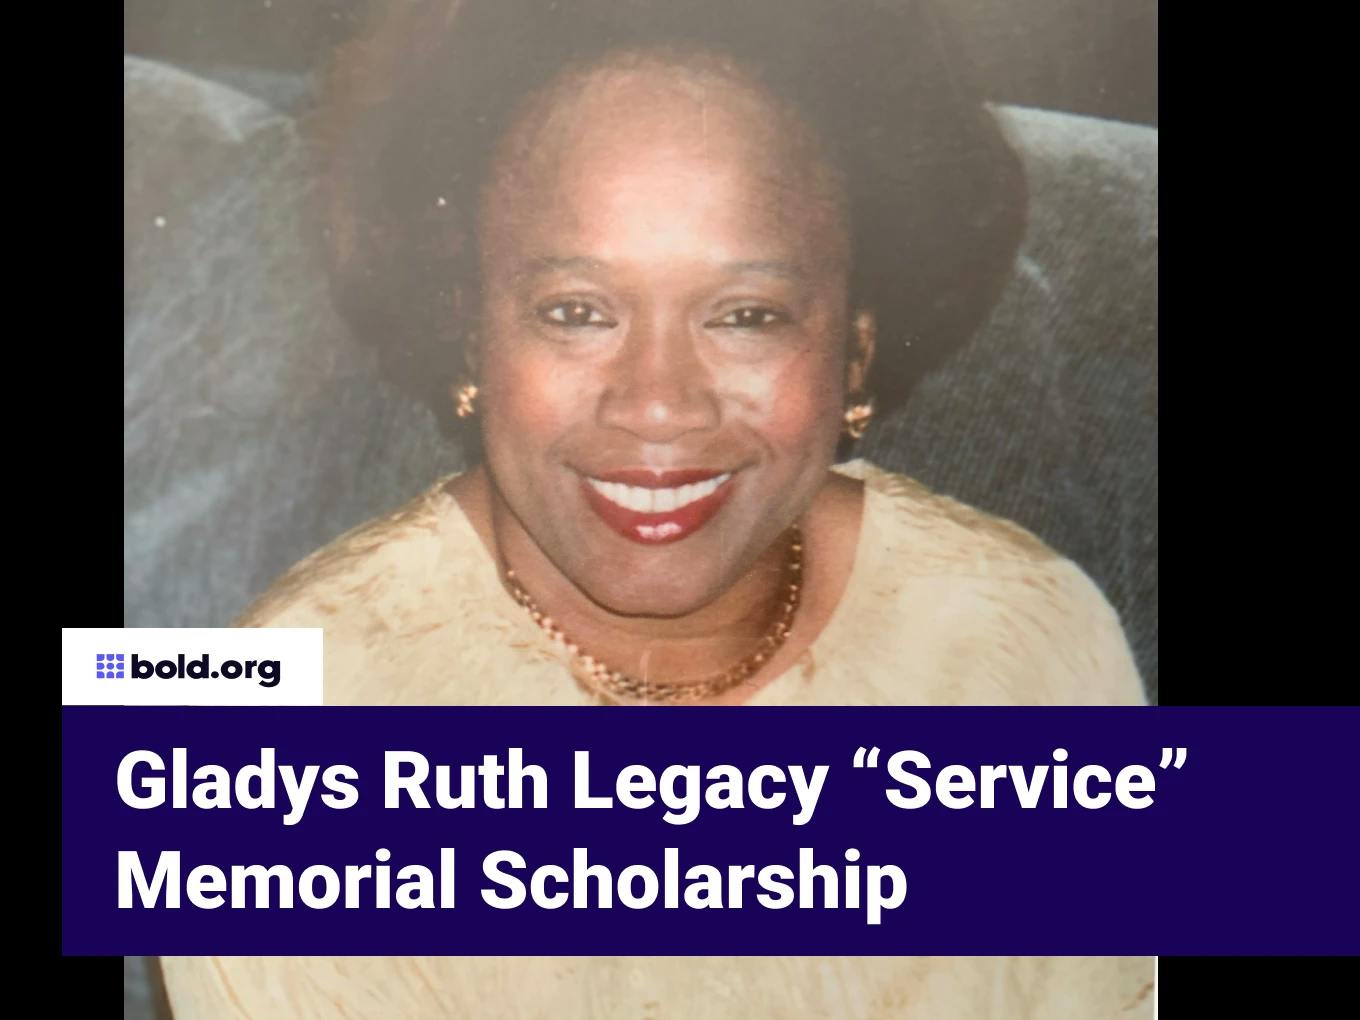 Gladys Ruth Legacy “Service“ Memorial Scholarship